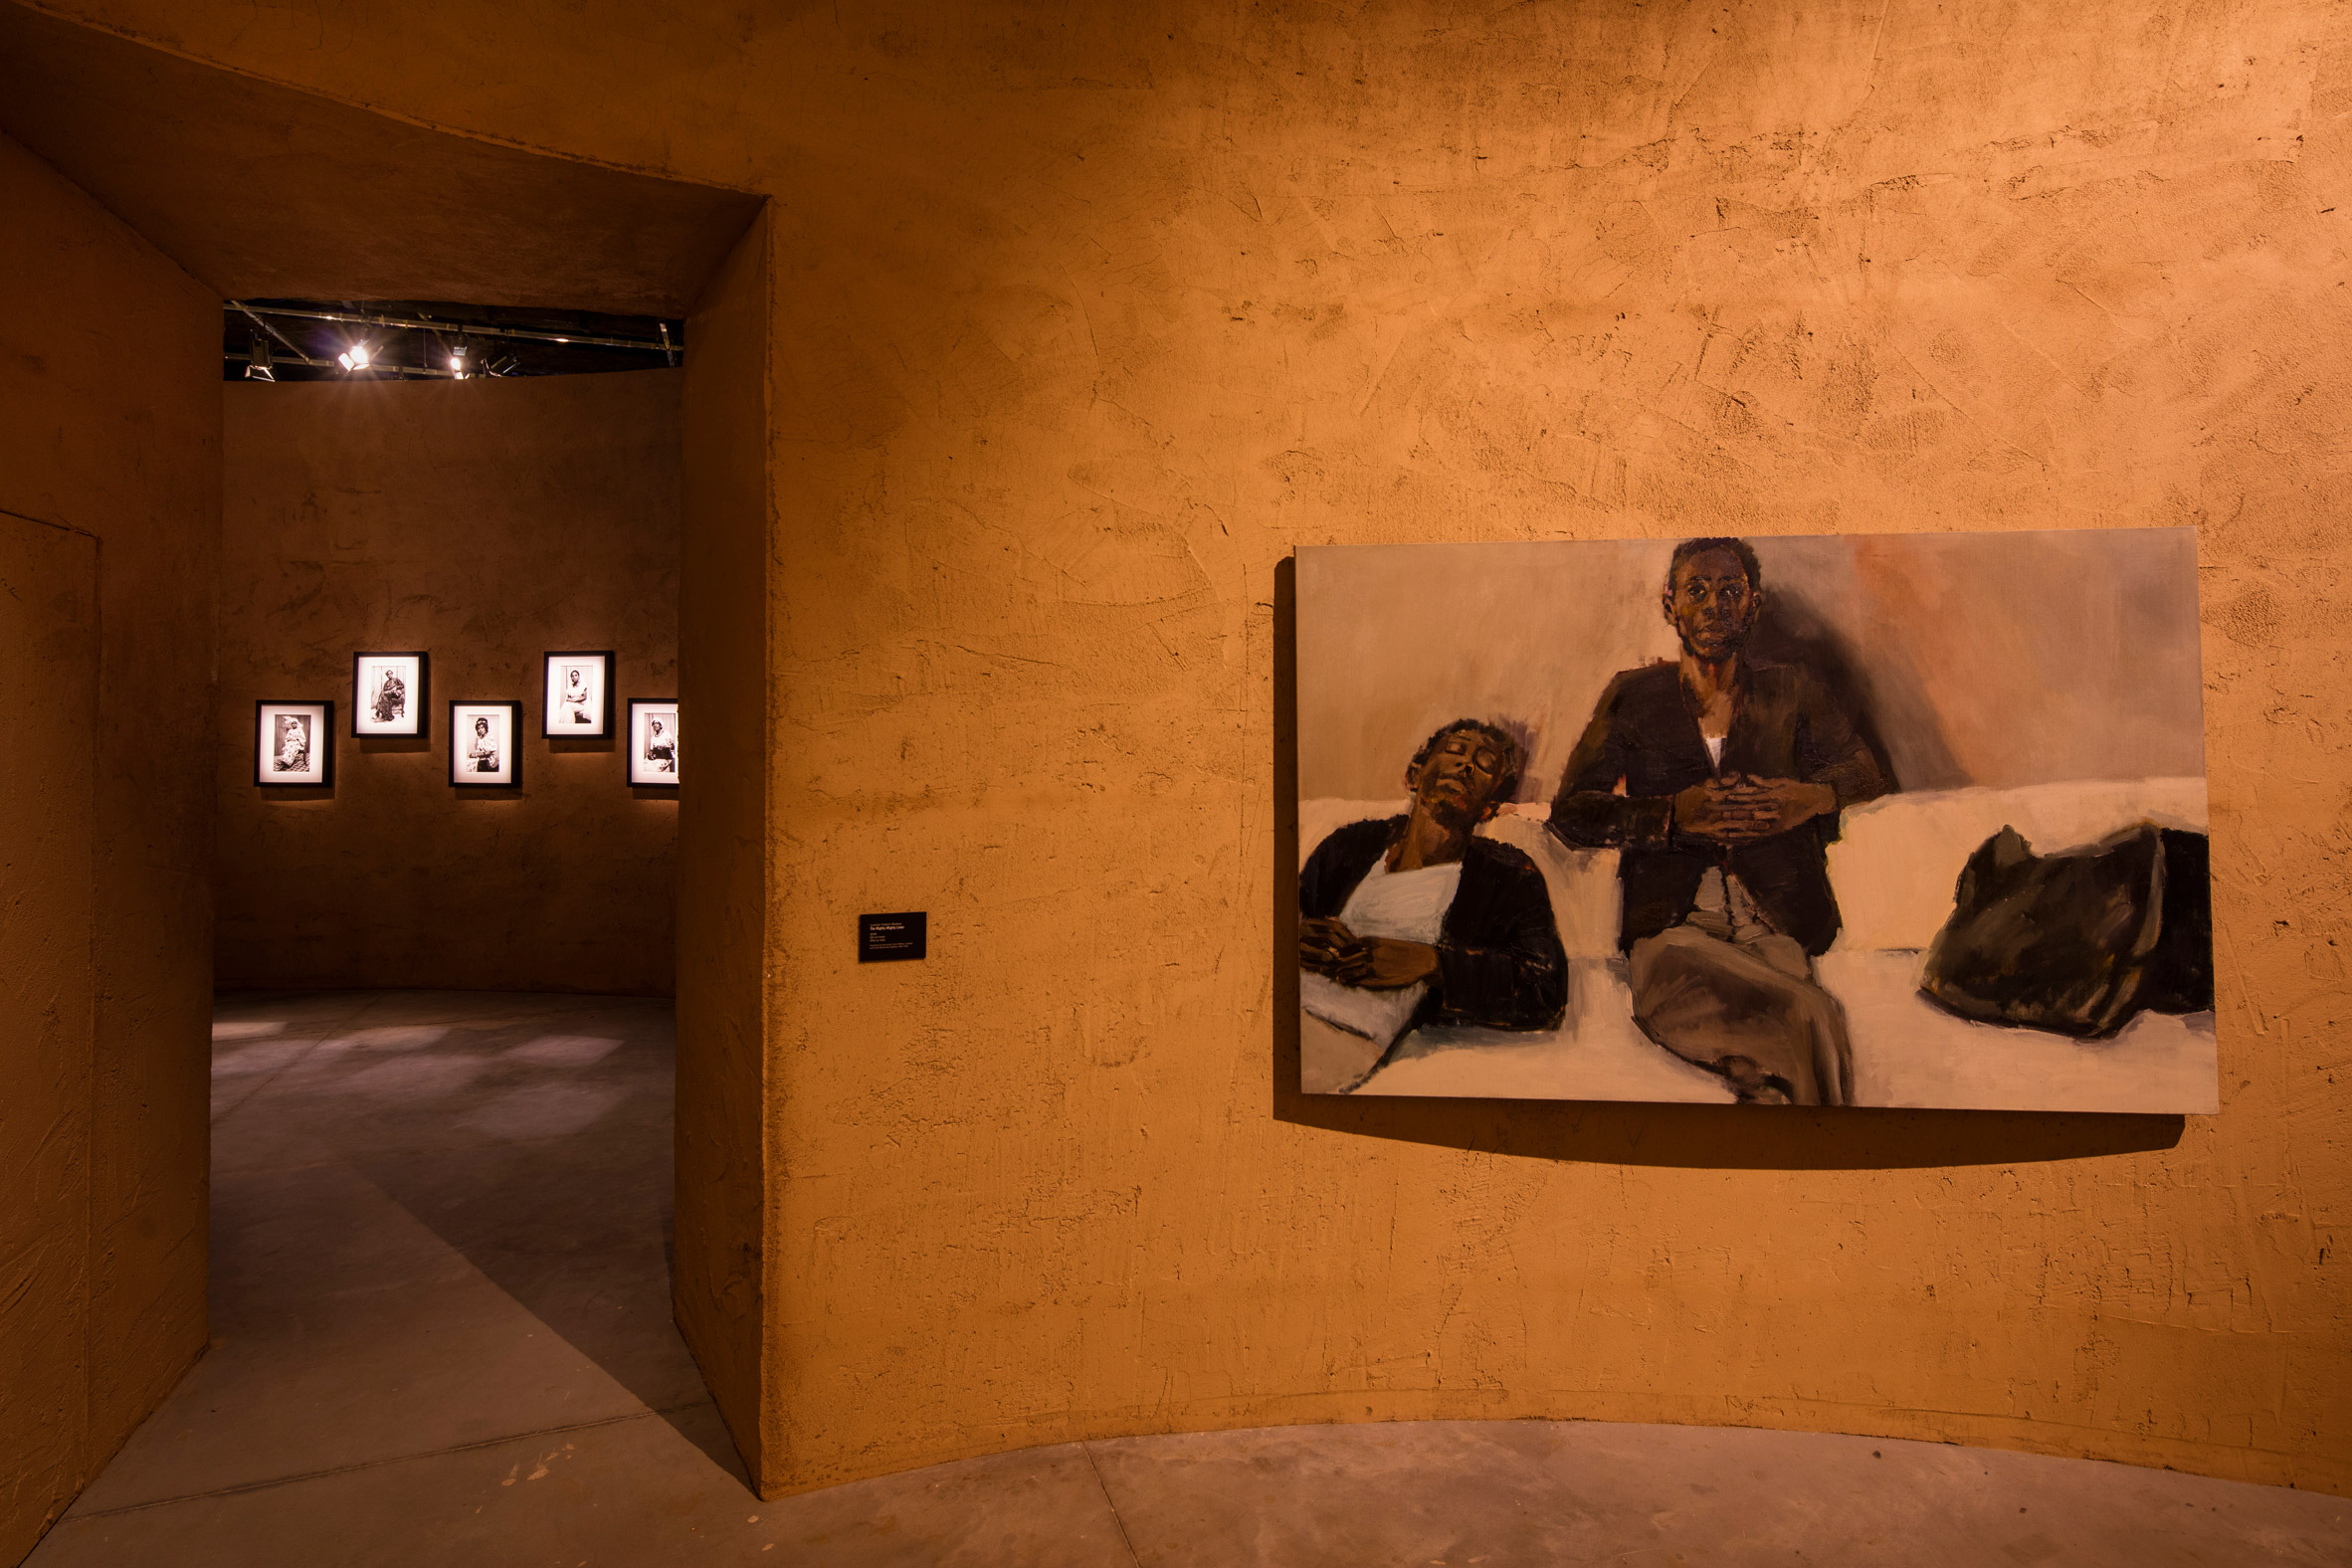 Ghana Freedom by David Adjaye at Venice Art Biennale